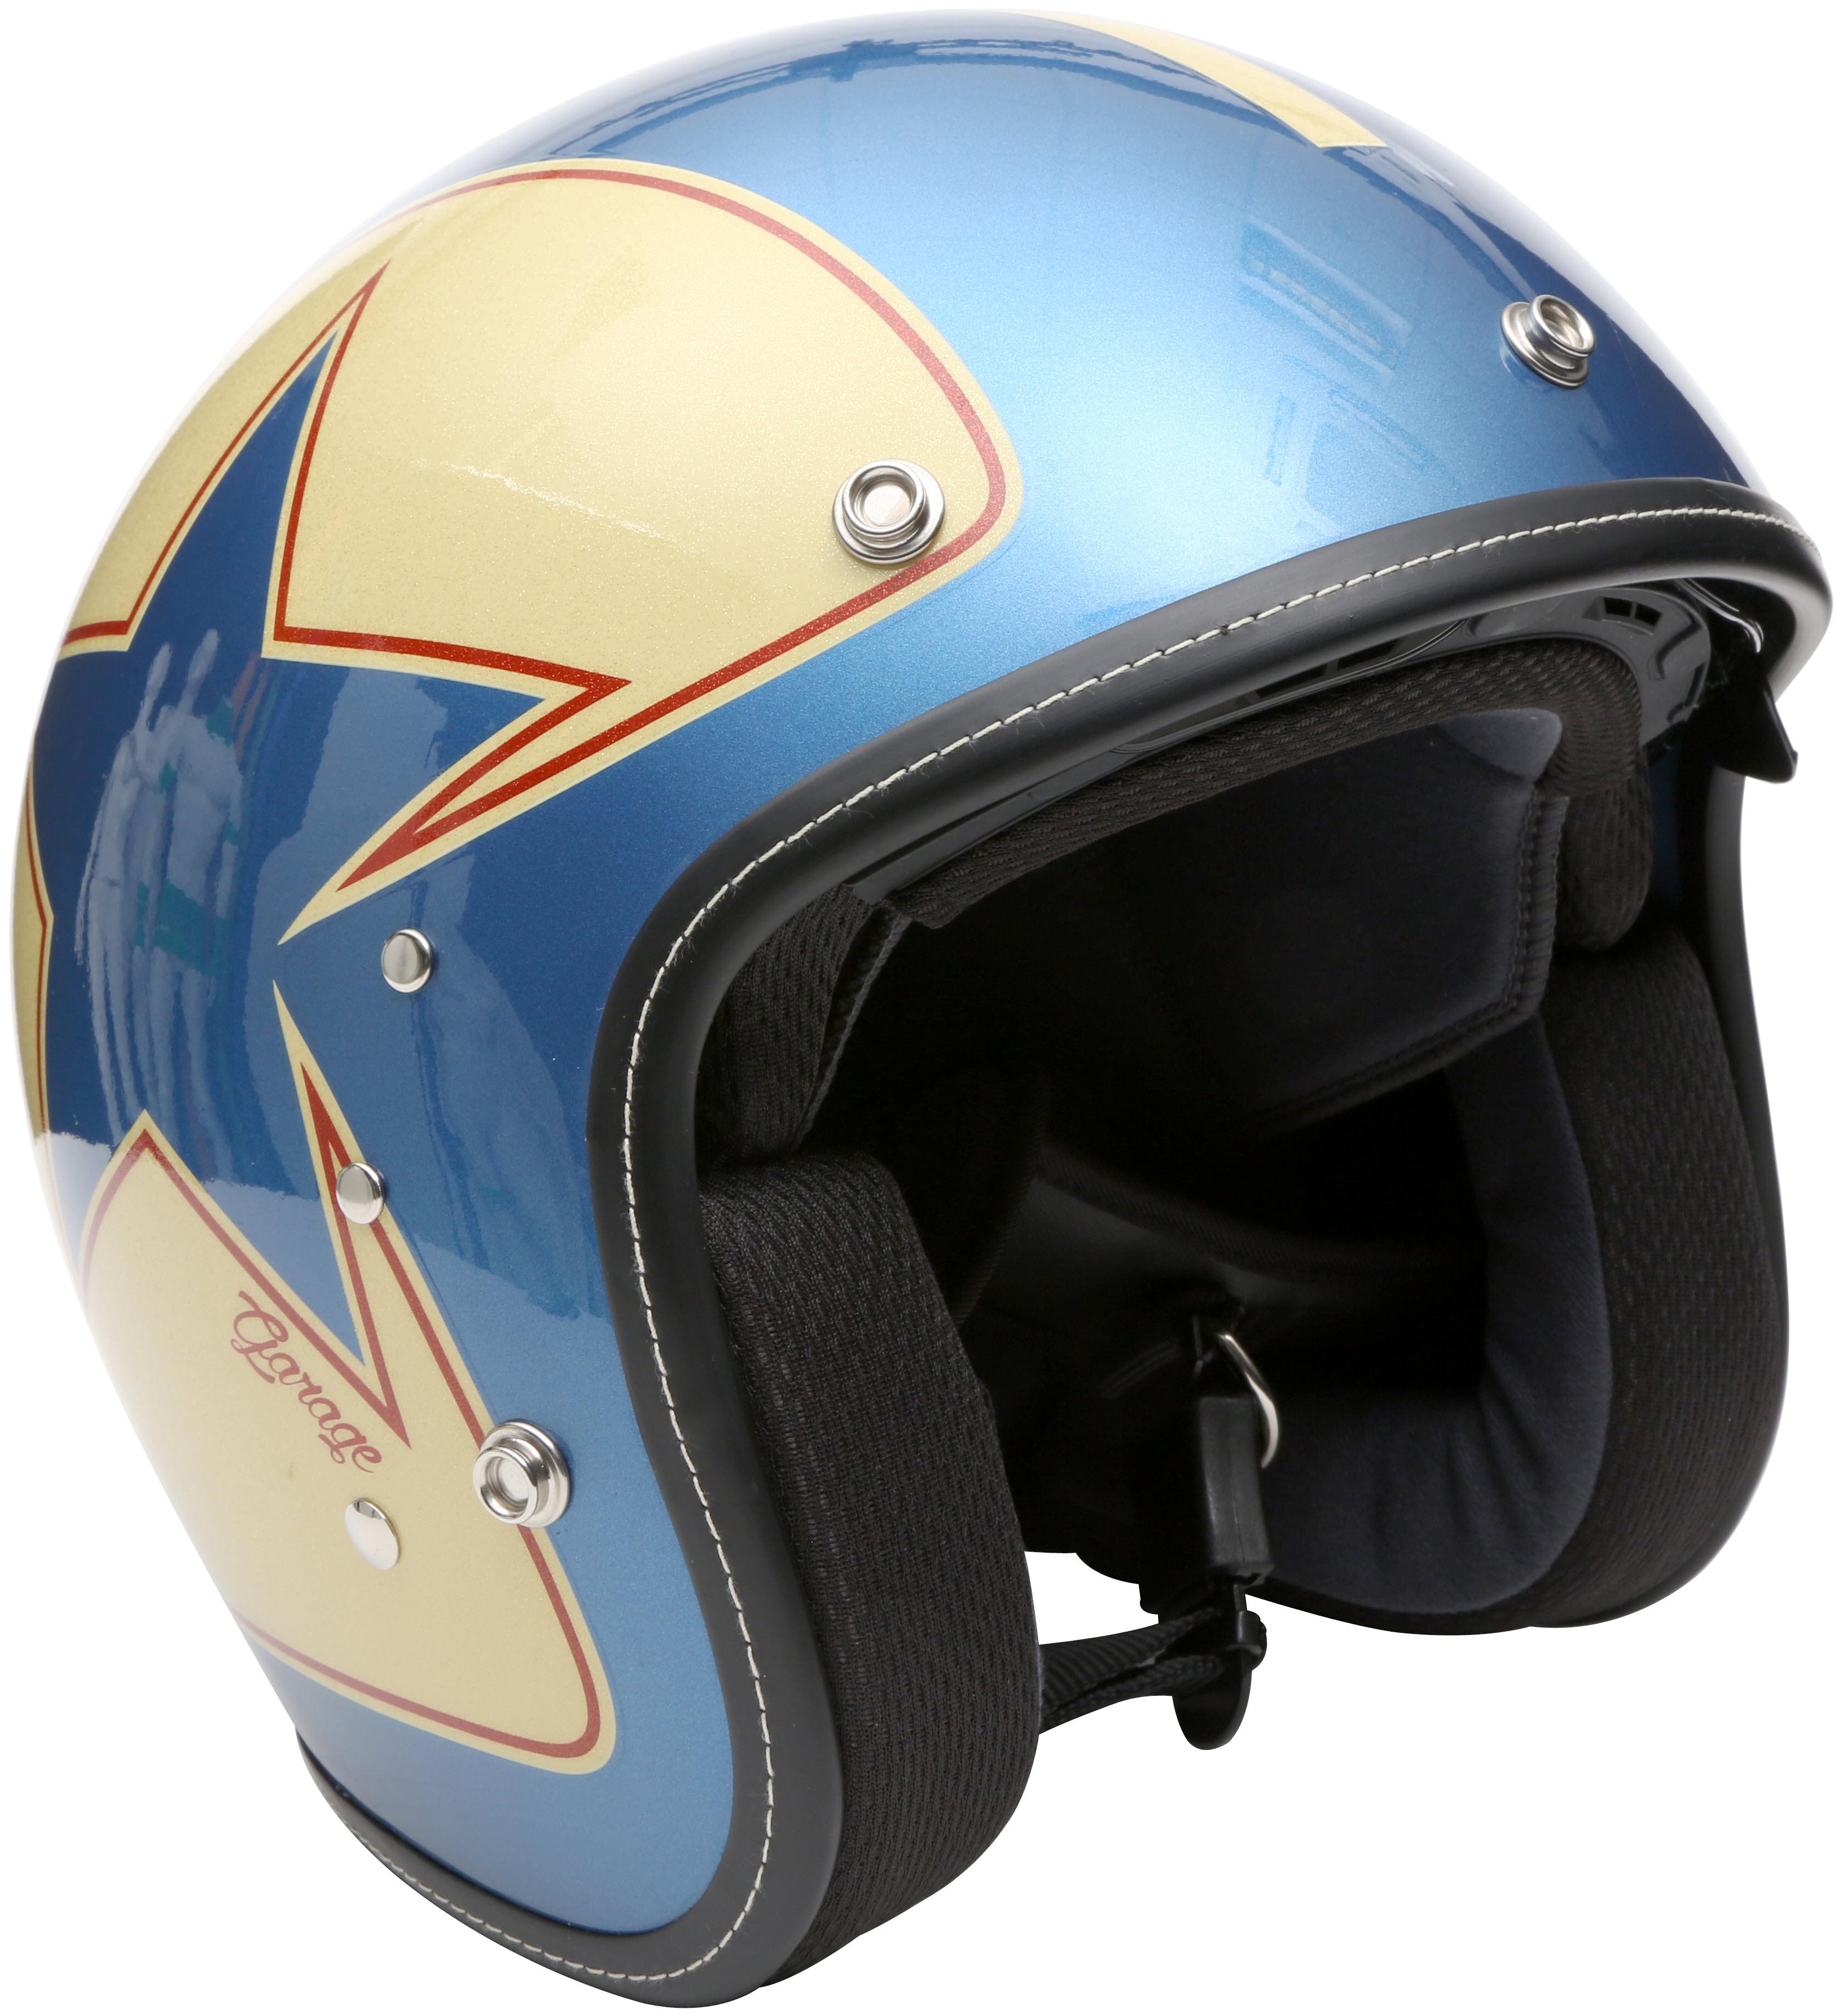 Duchinni Open Face Motorcycle Helmet - Blue/Red, Medium